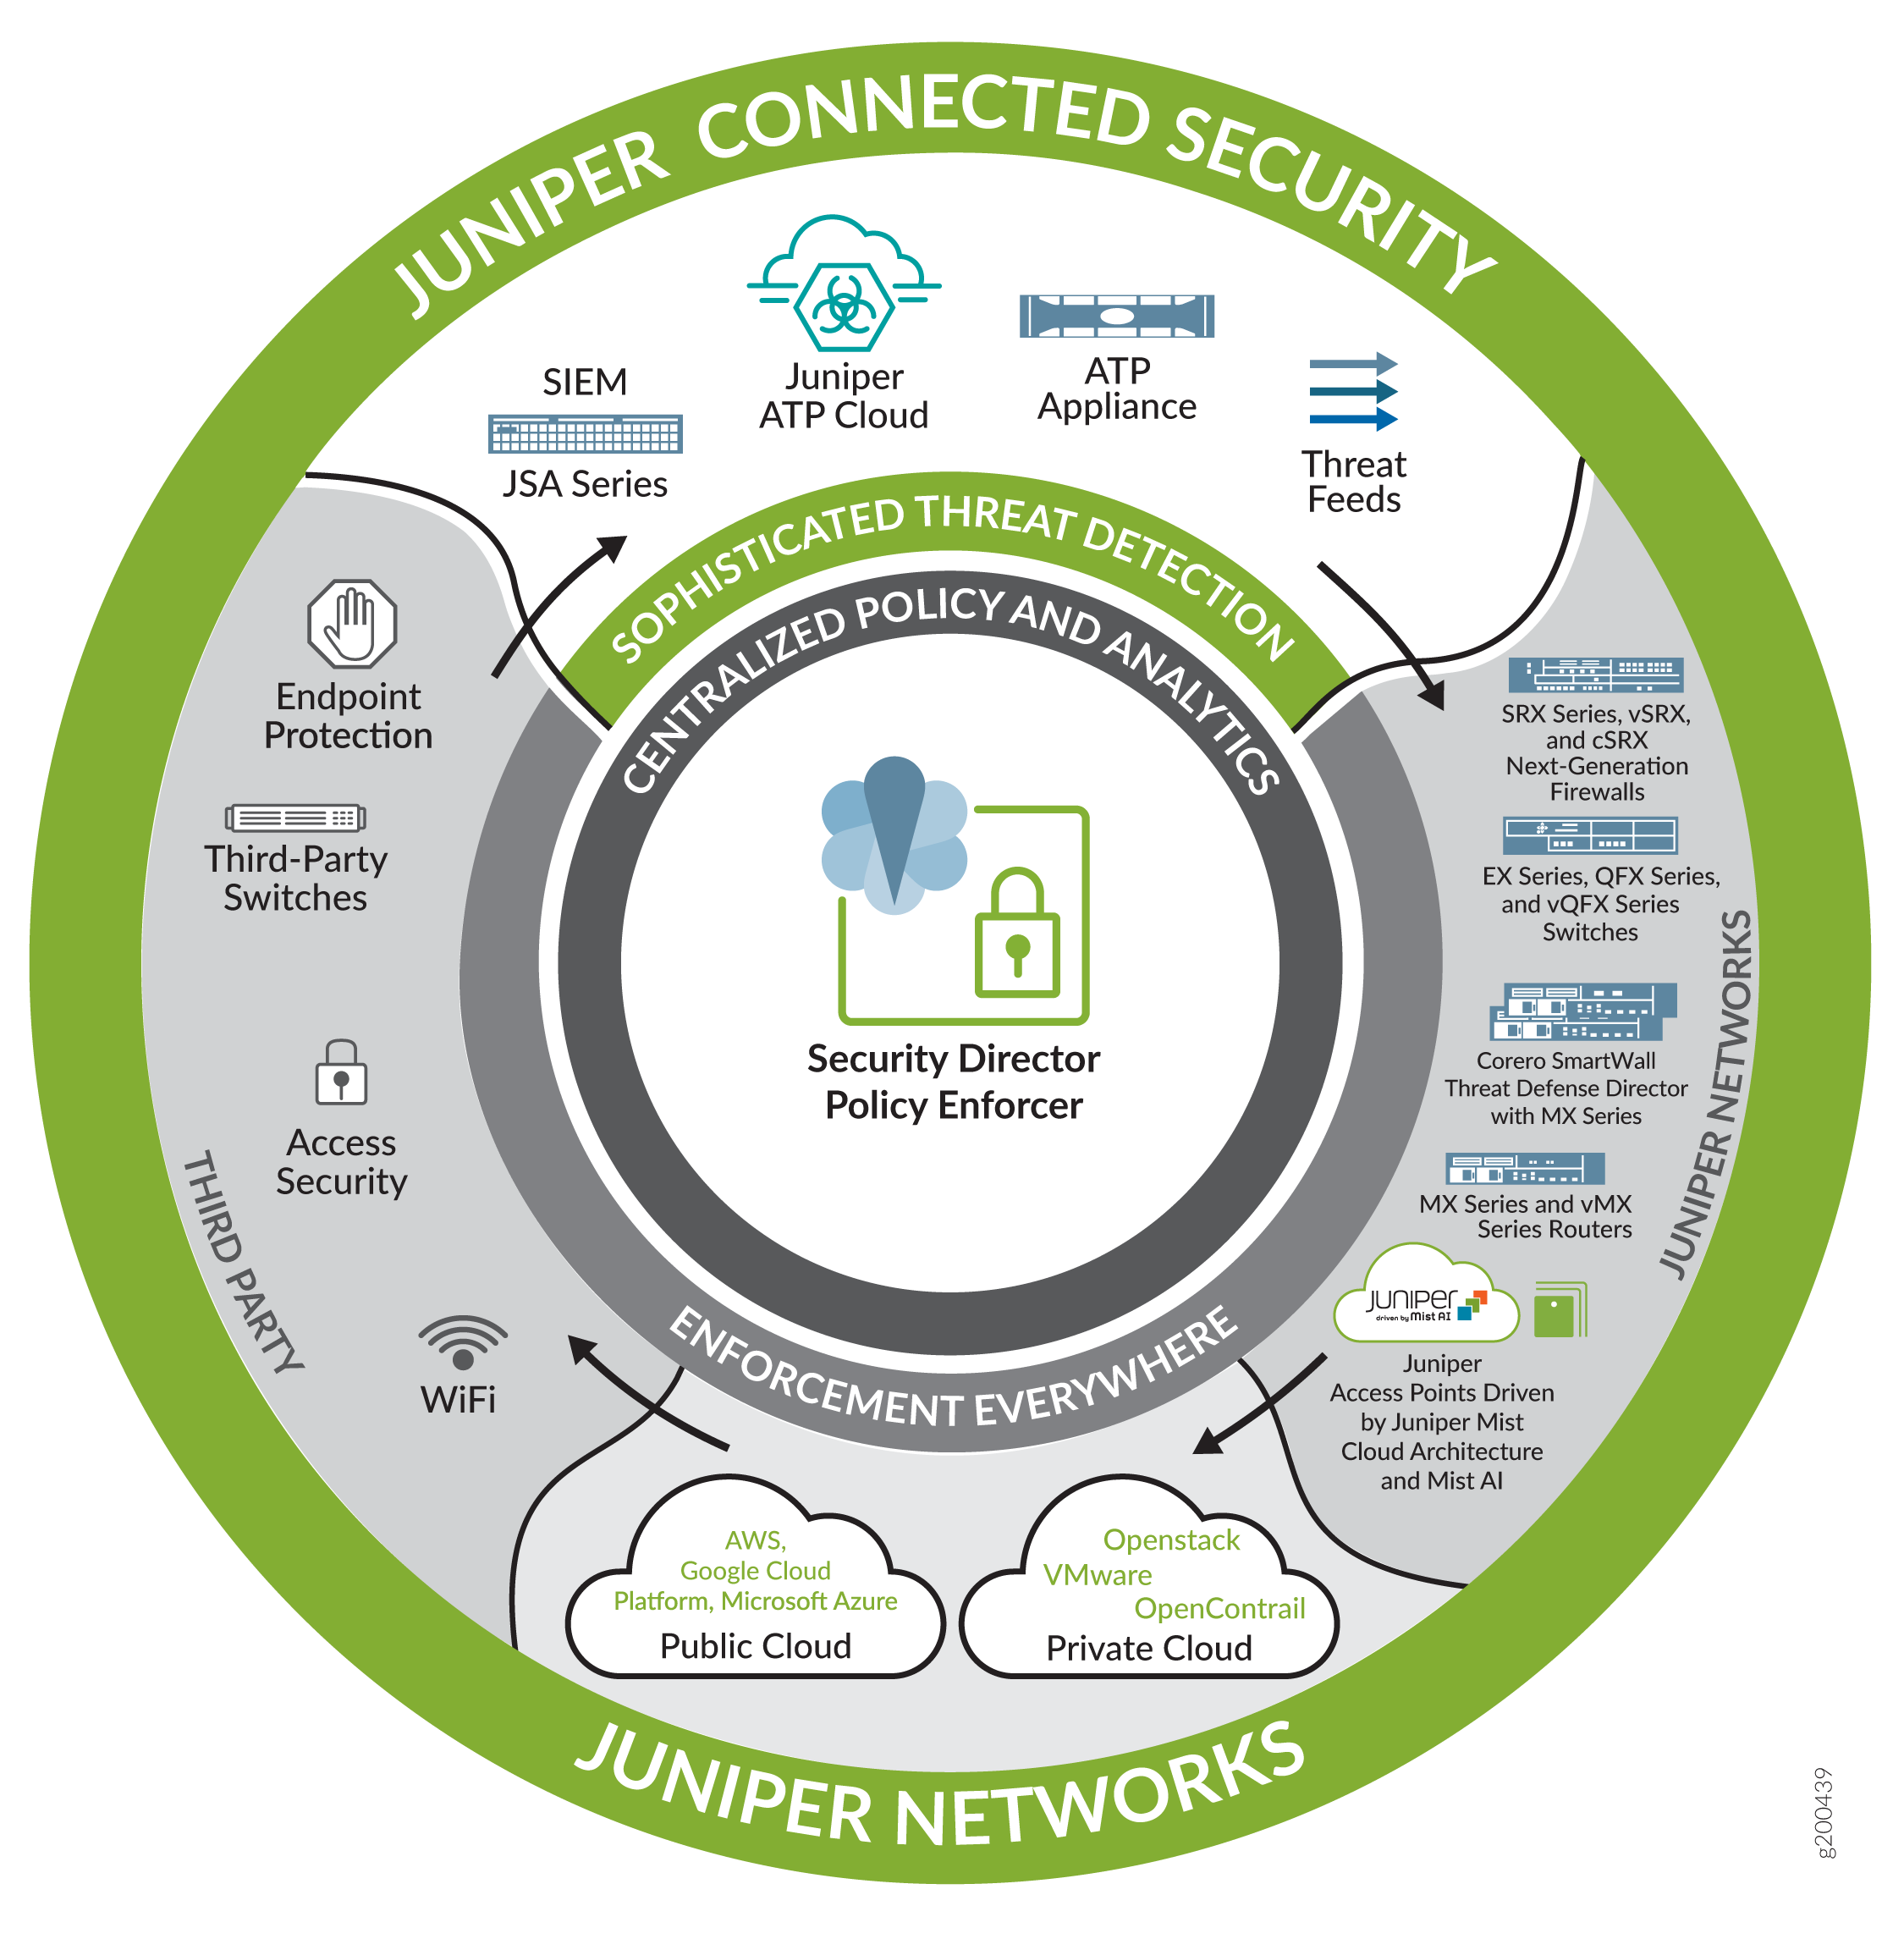 Juniper Connected Security